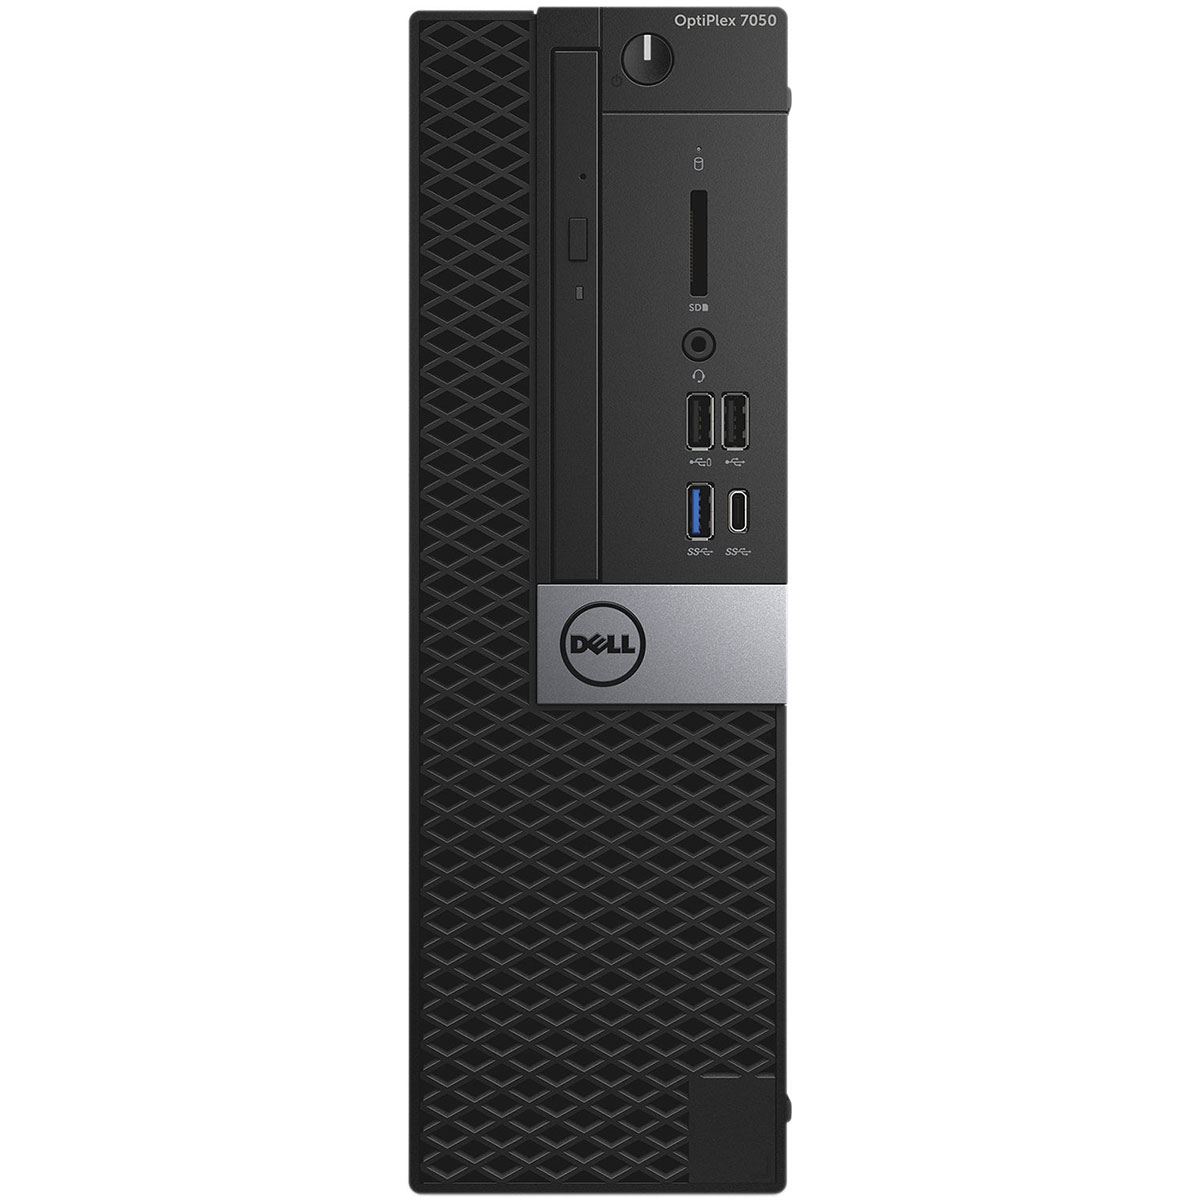 Refurbished: Pre-built Gaming PC Dell OptiPlex 7050 Tower Intel